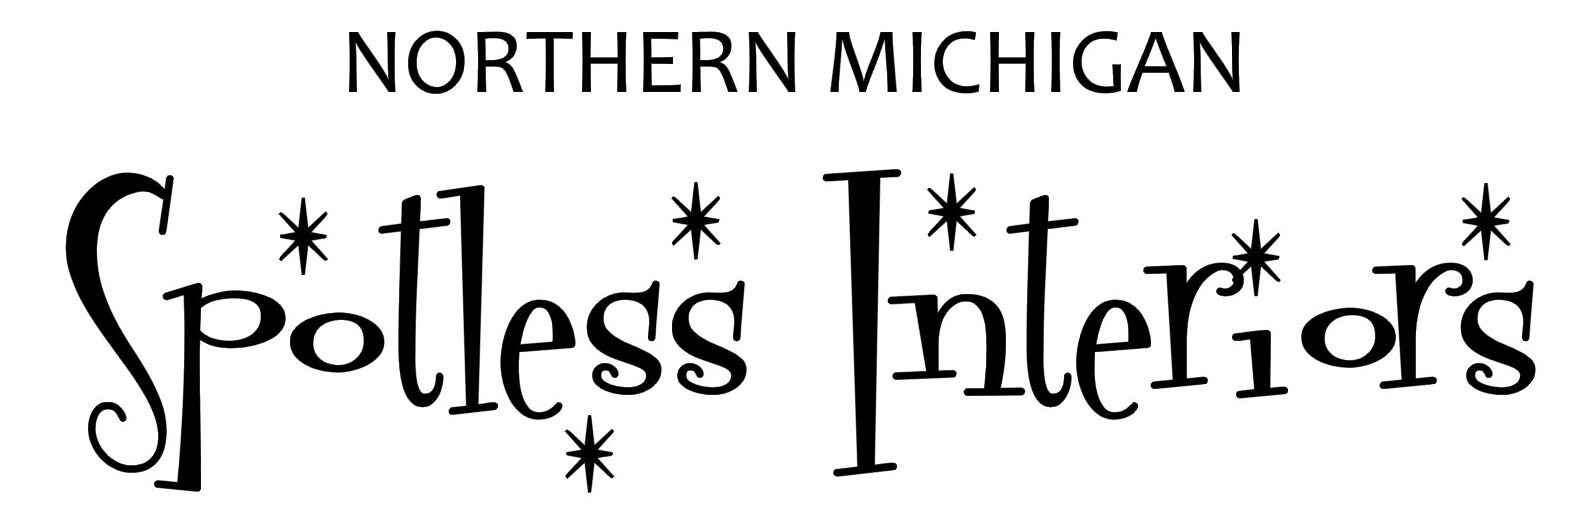 Northern Michigan Spotless Interiors